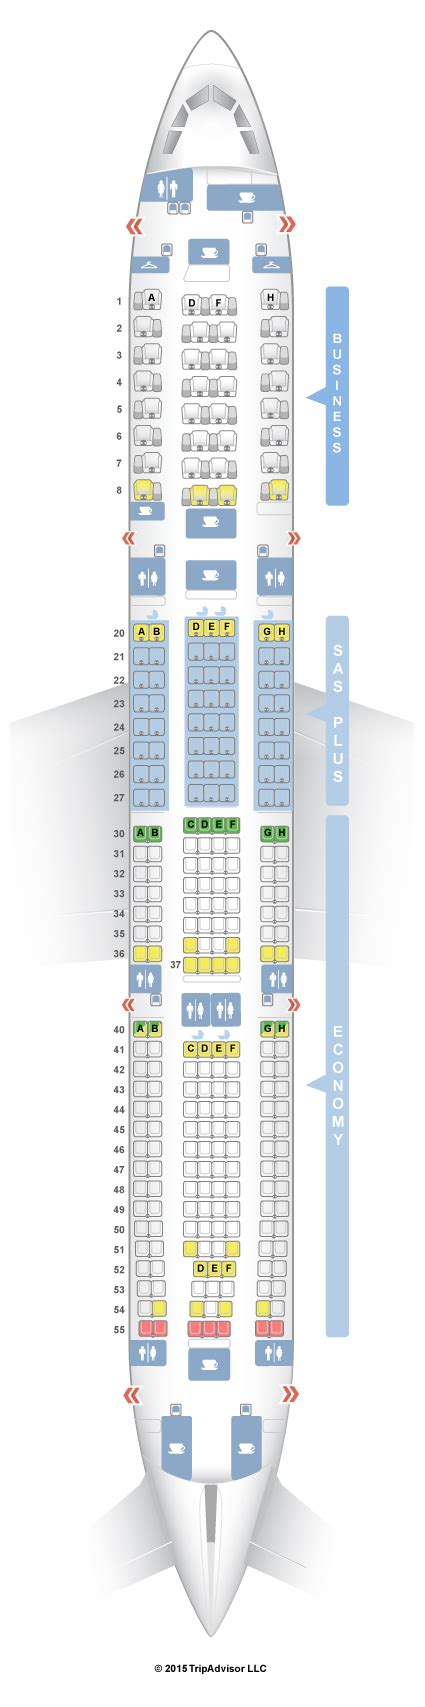 Seatguru Seat Map Sas Airbus A330 300 333 V2 Seatguru Sas Airlines